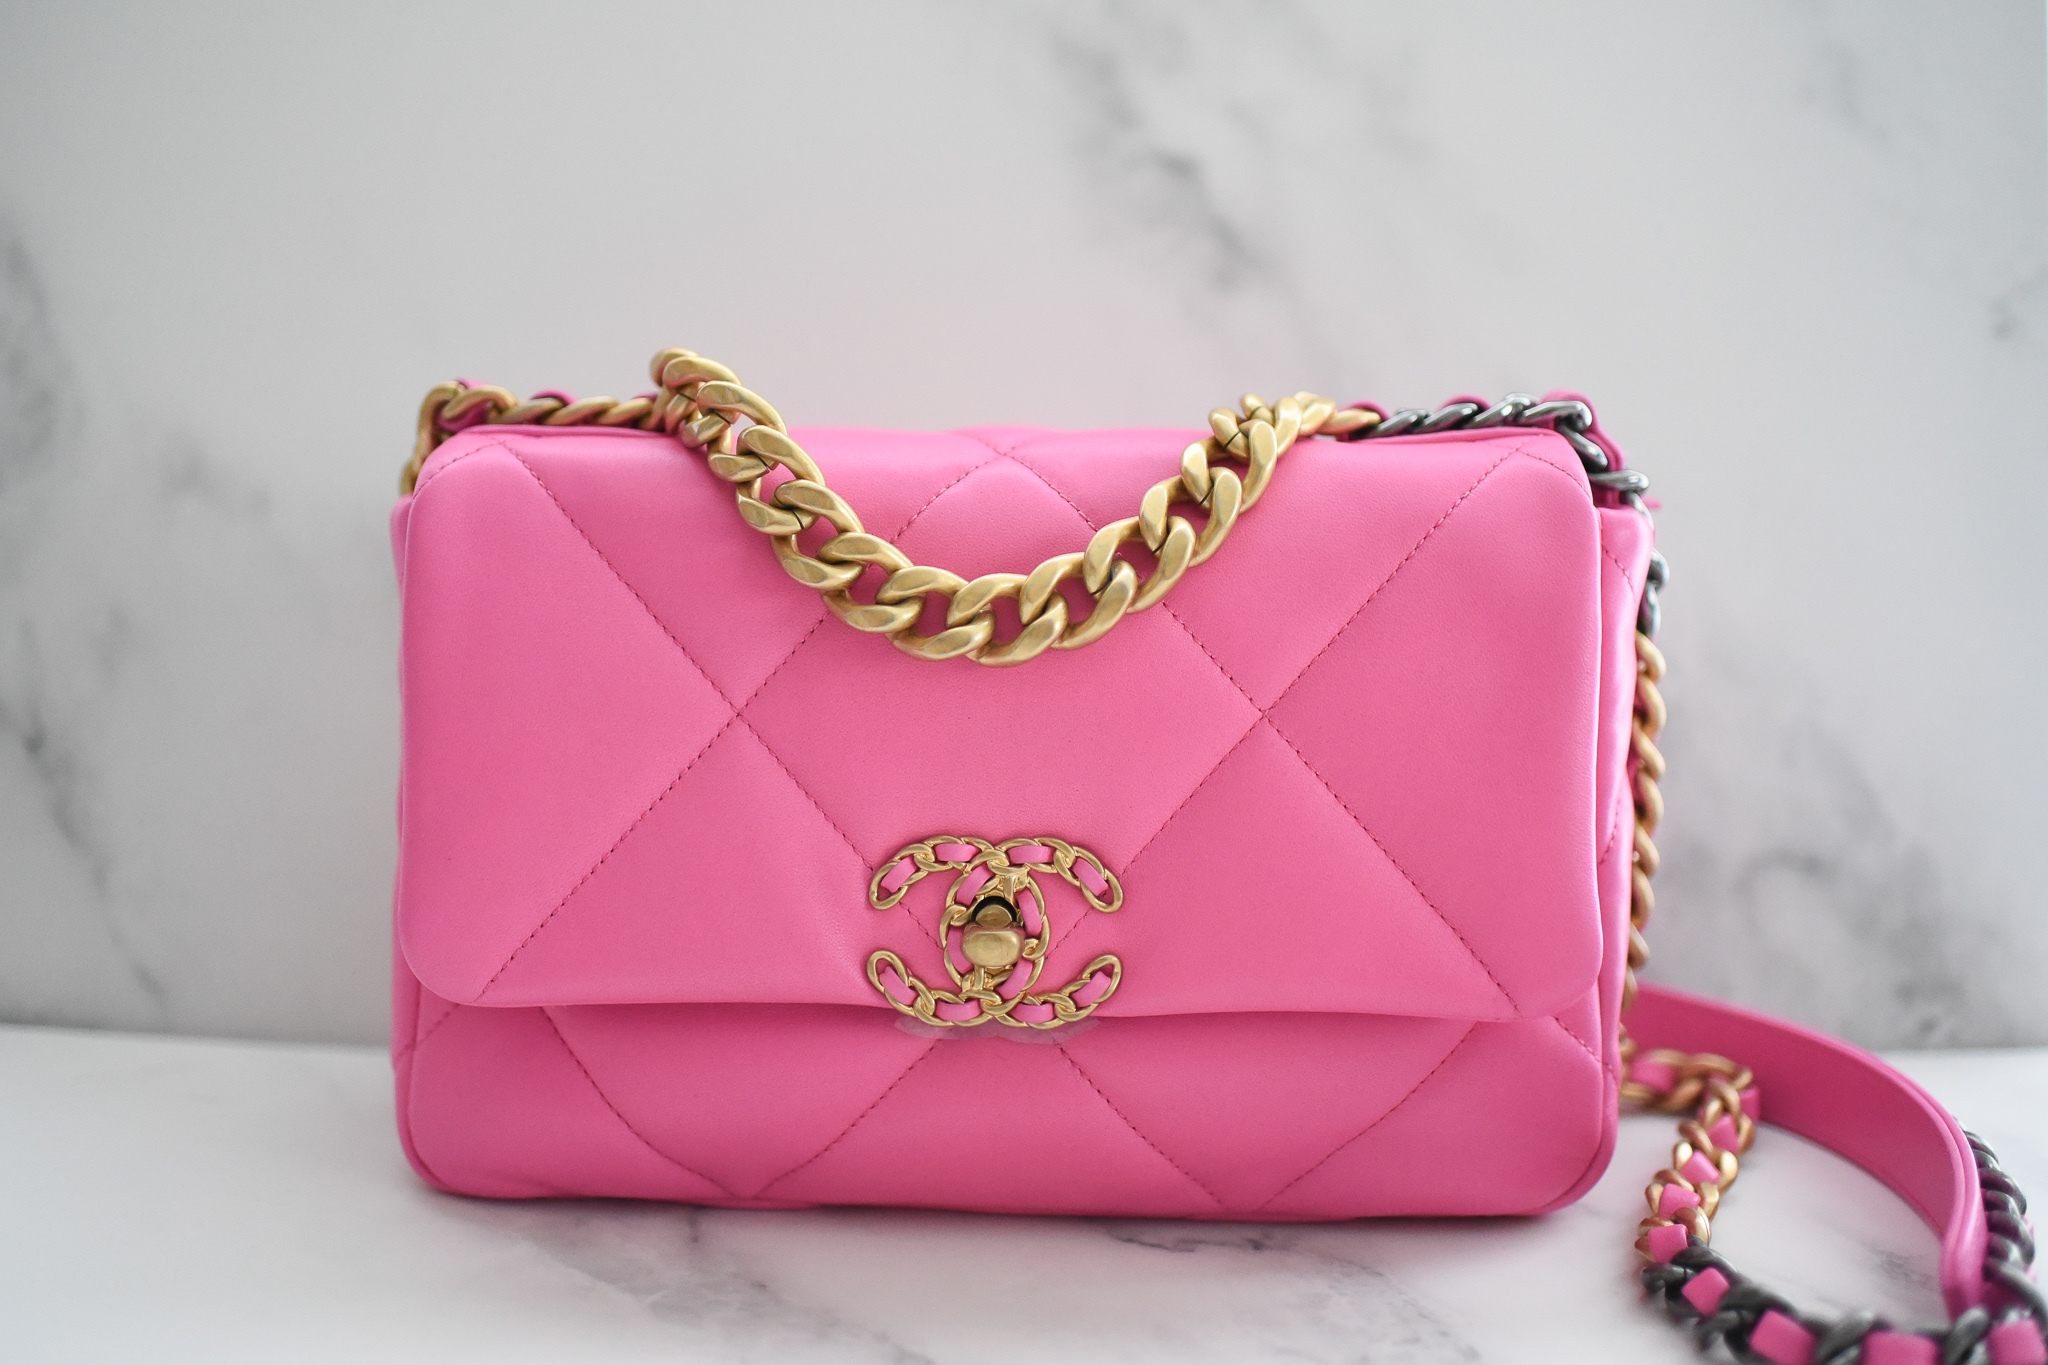 Chanel 19 Medium (Small), 21S Neon Hot Pink, New in Box GA001 - Julia Rose  Boston